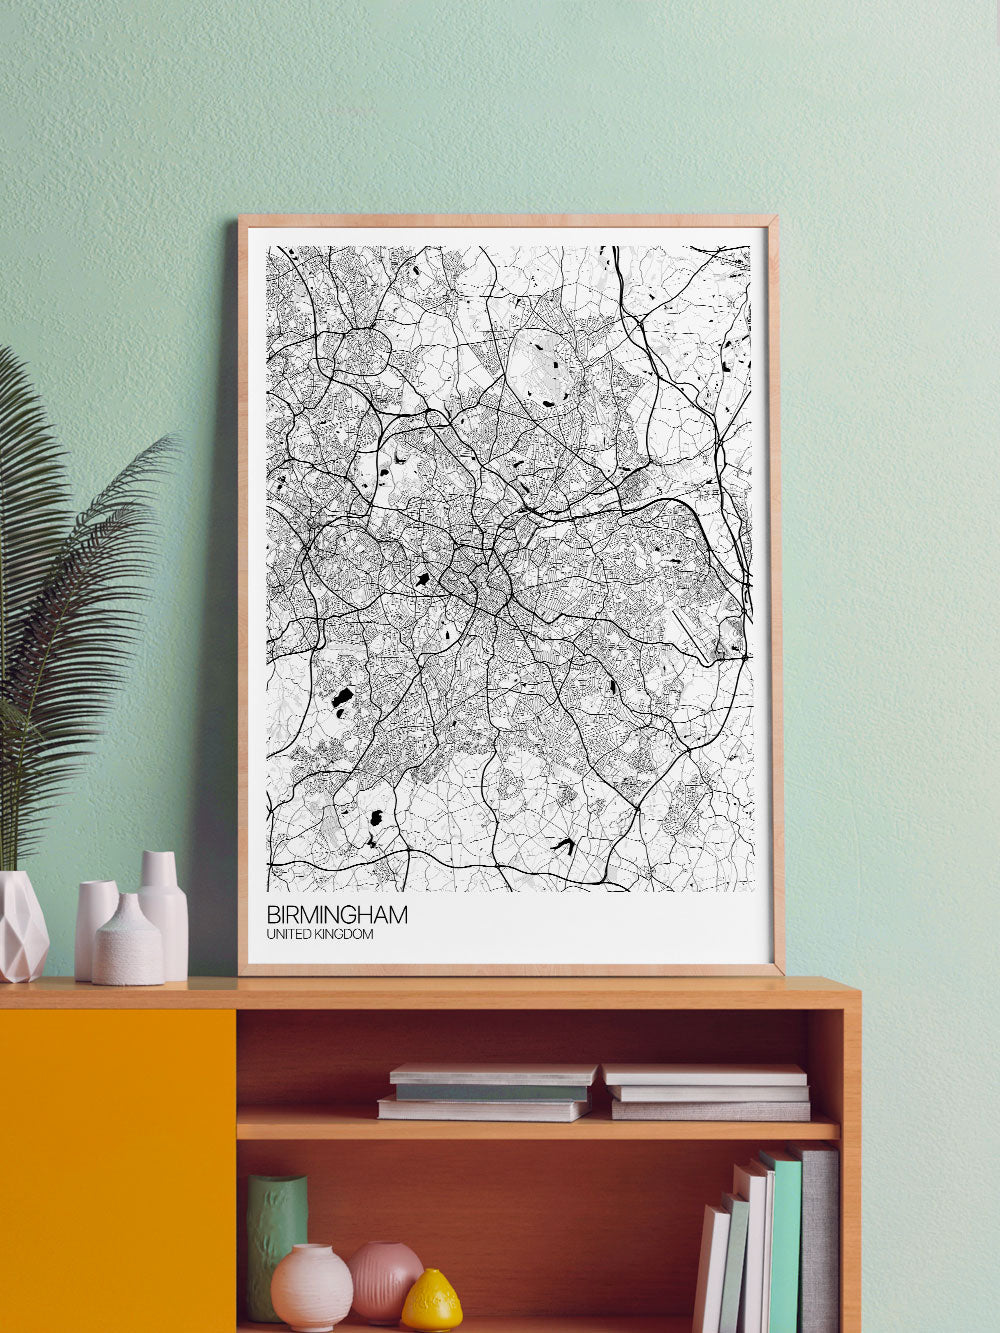 Birmingham UK Map Art in a frame on a shelf